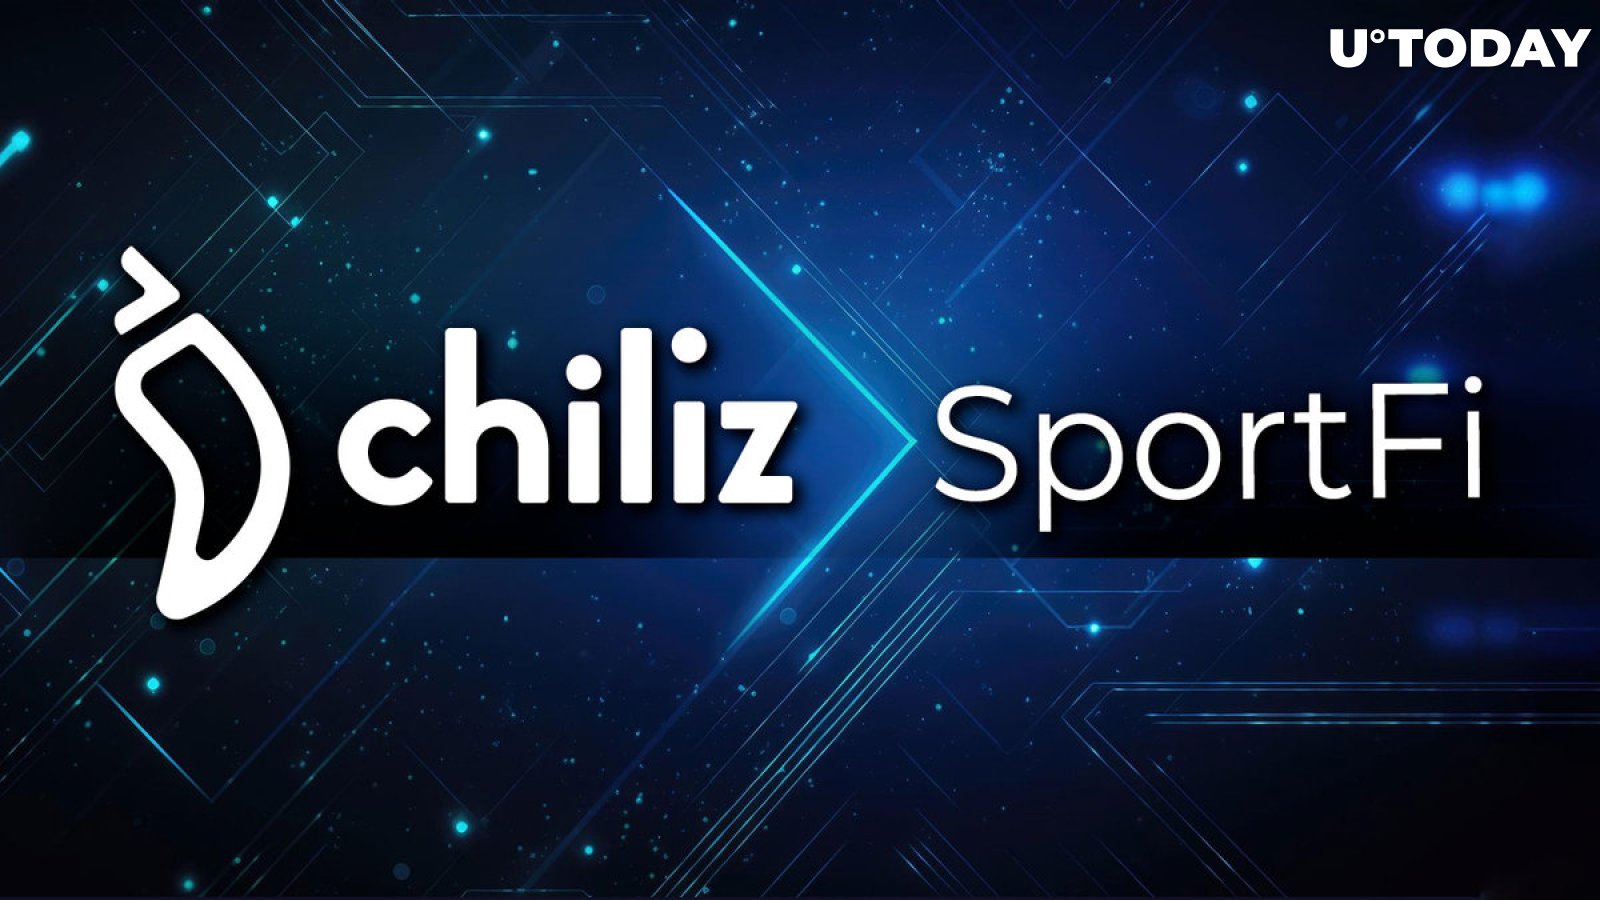 SportFi Ecosystem Launched by Chiliz (CHZ): Details